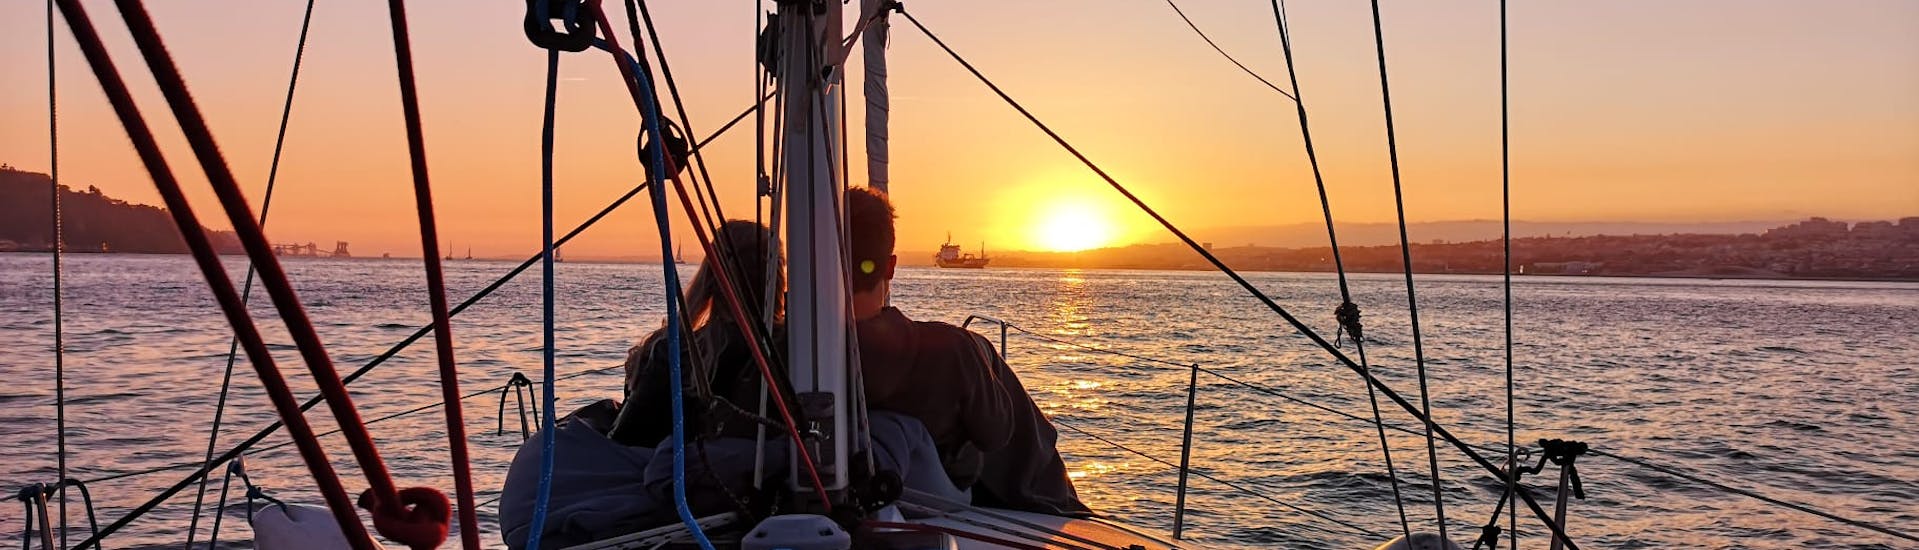 Gita privata in barca a vela da Cascais al tramonto.